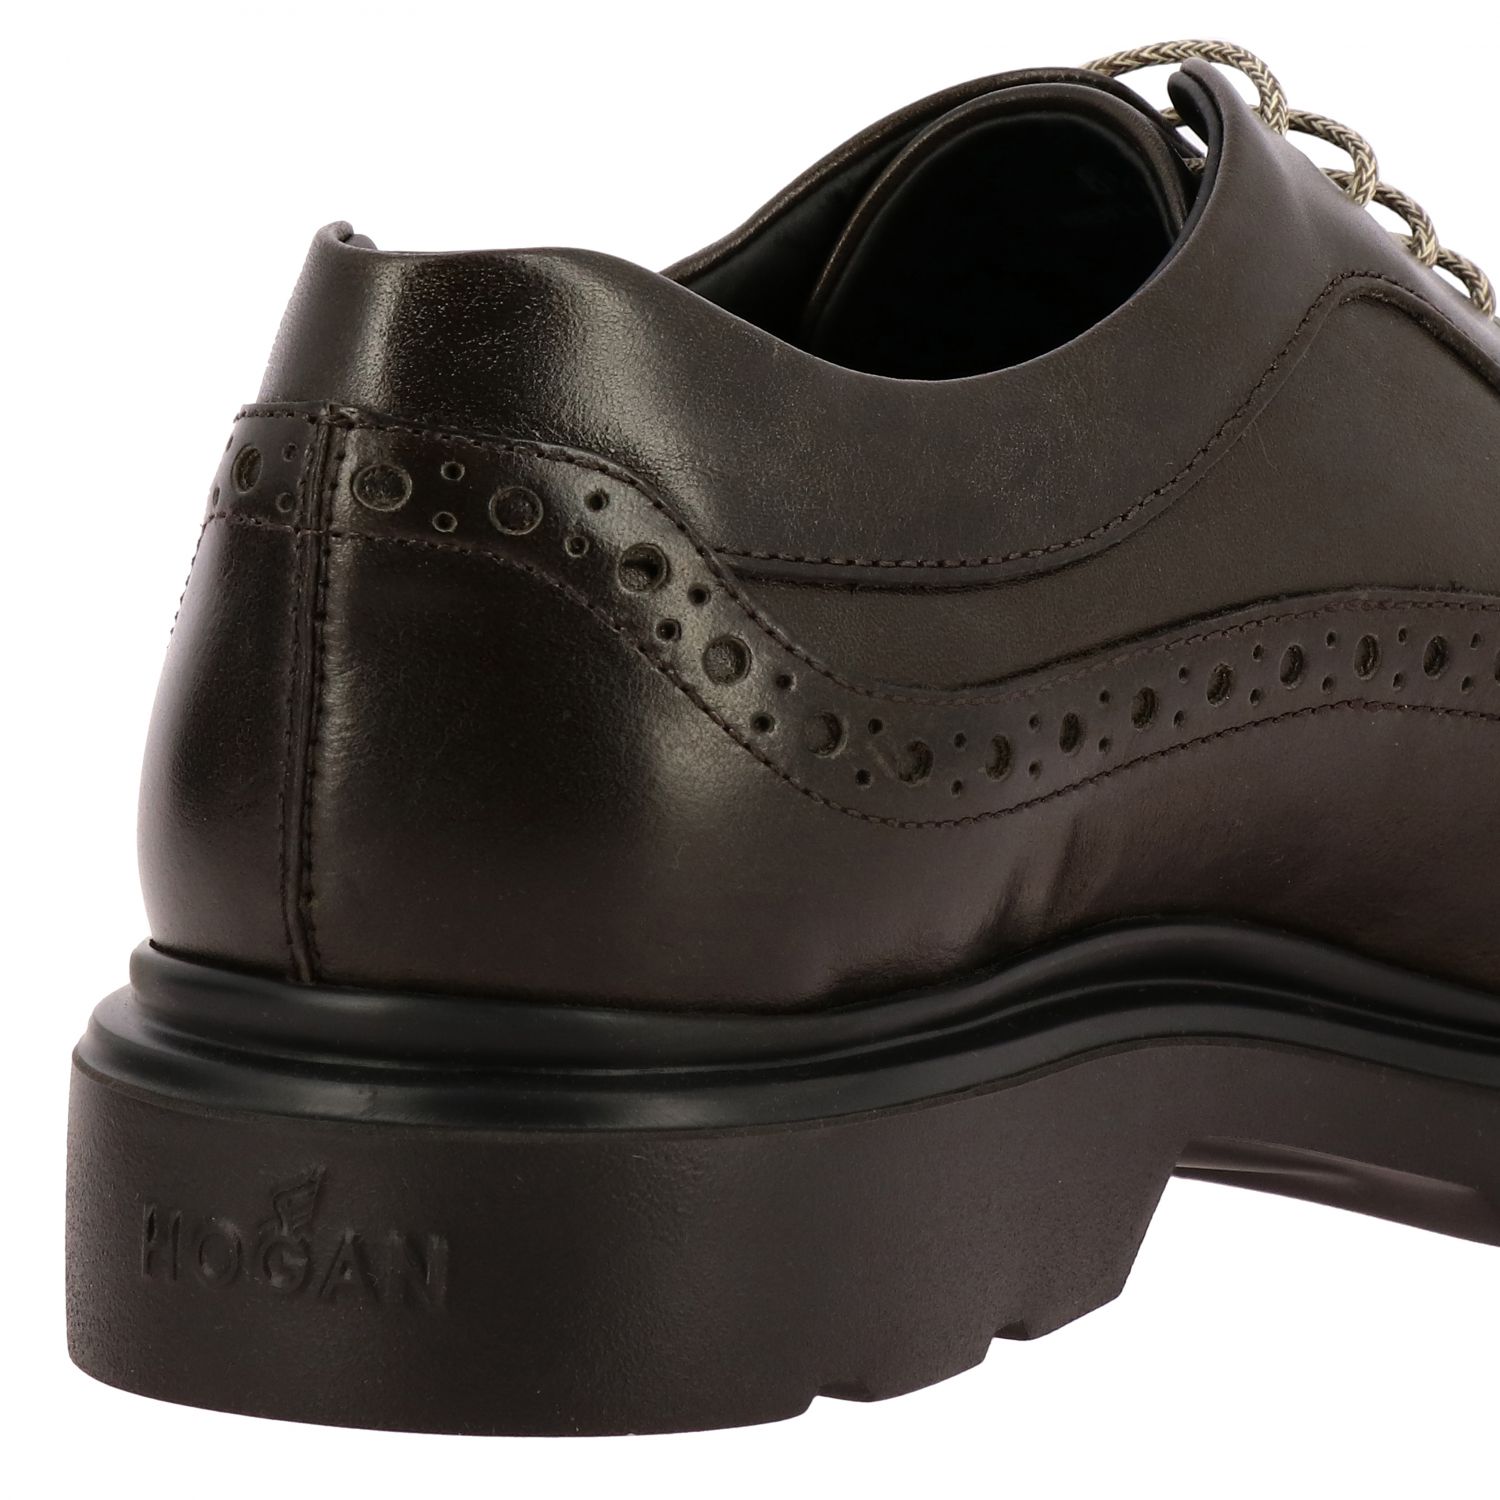 Zapatos de cordones Hogan: Zapatos hombre Hogan marrón oscuro 5